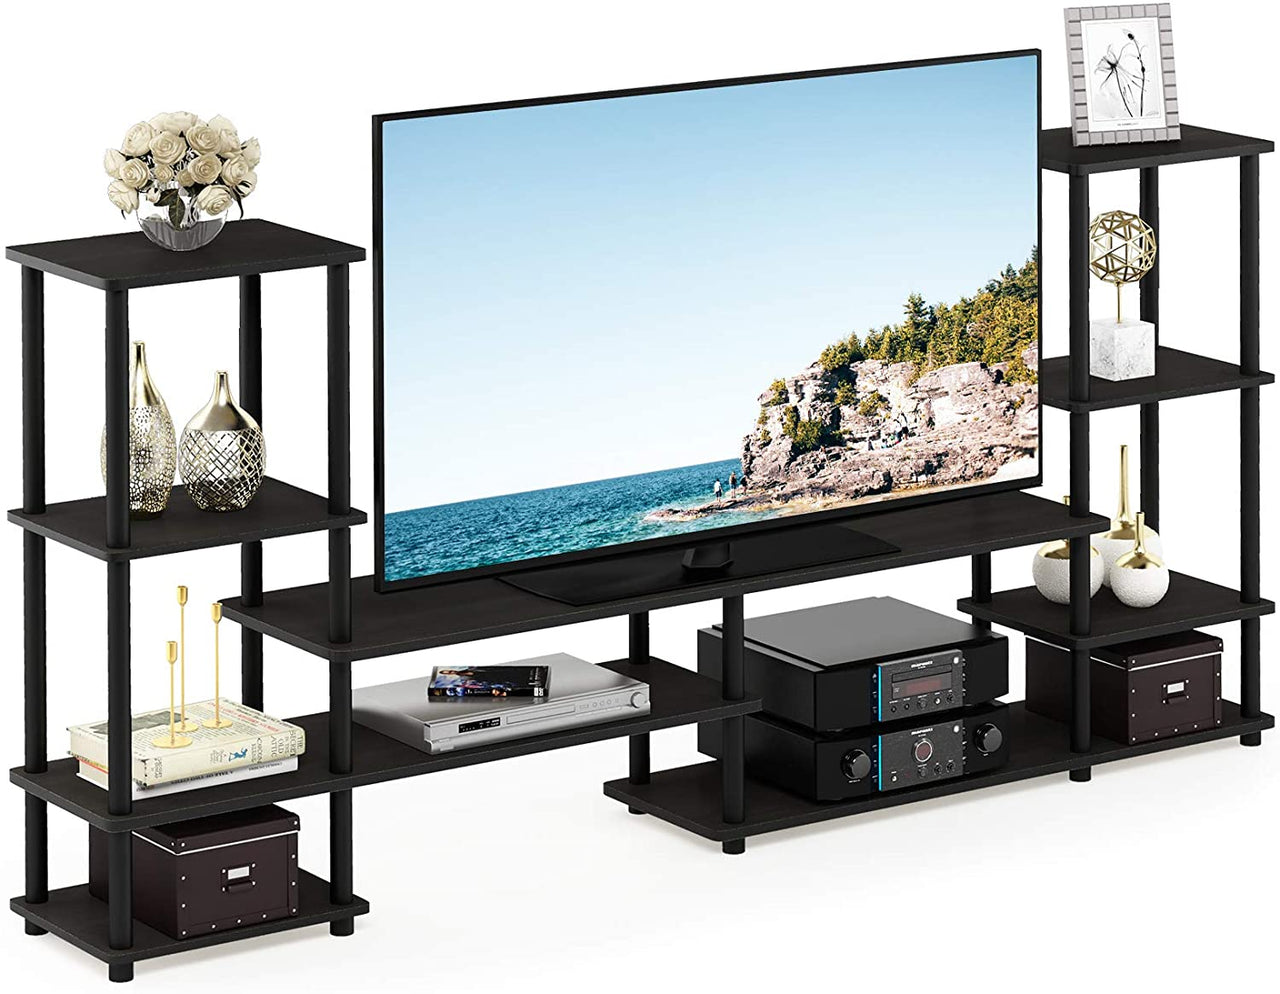 Tv Stand With Storage Shelf